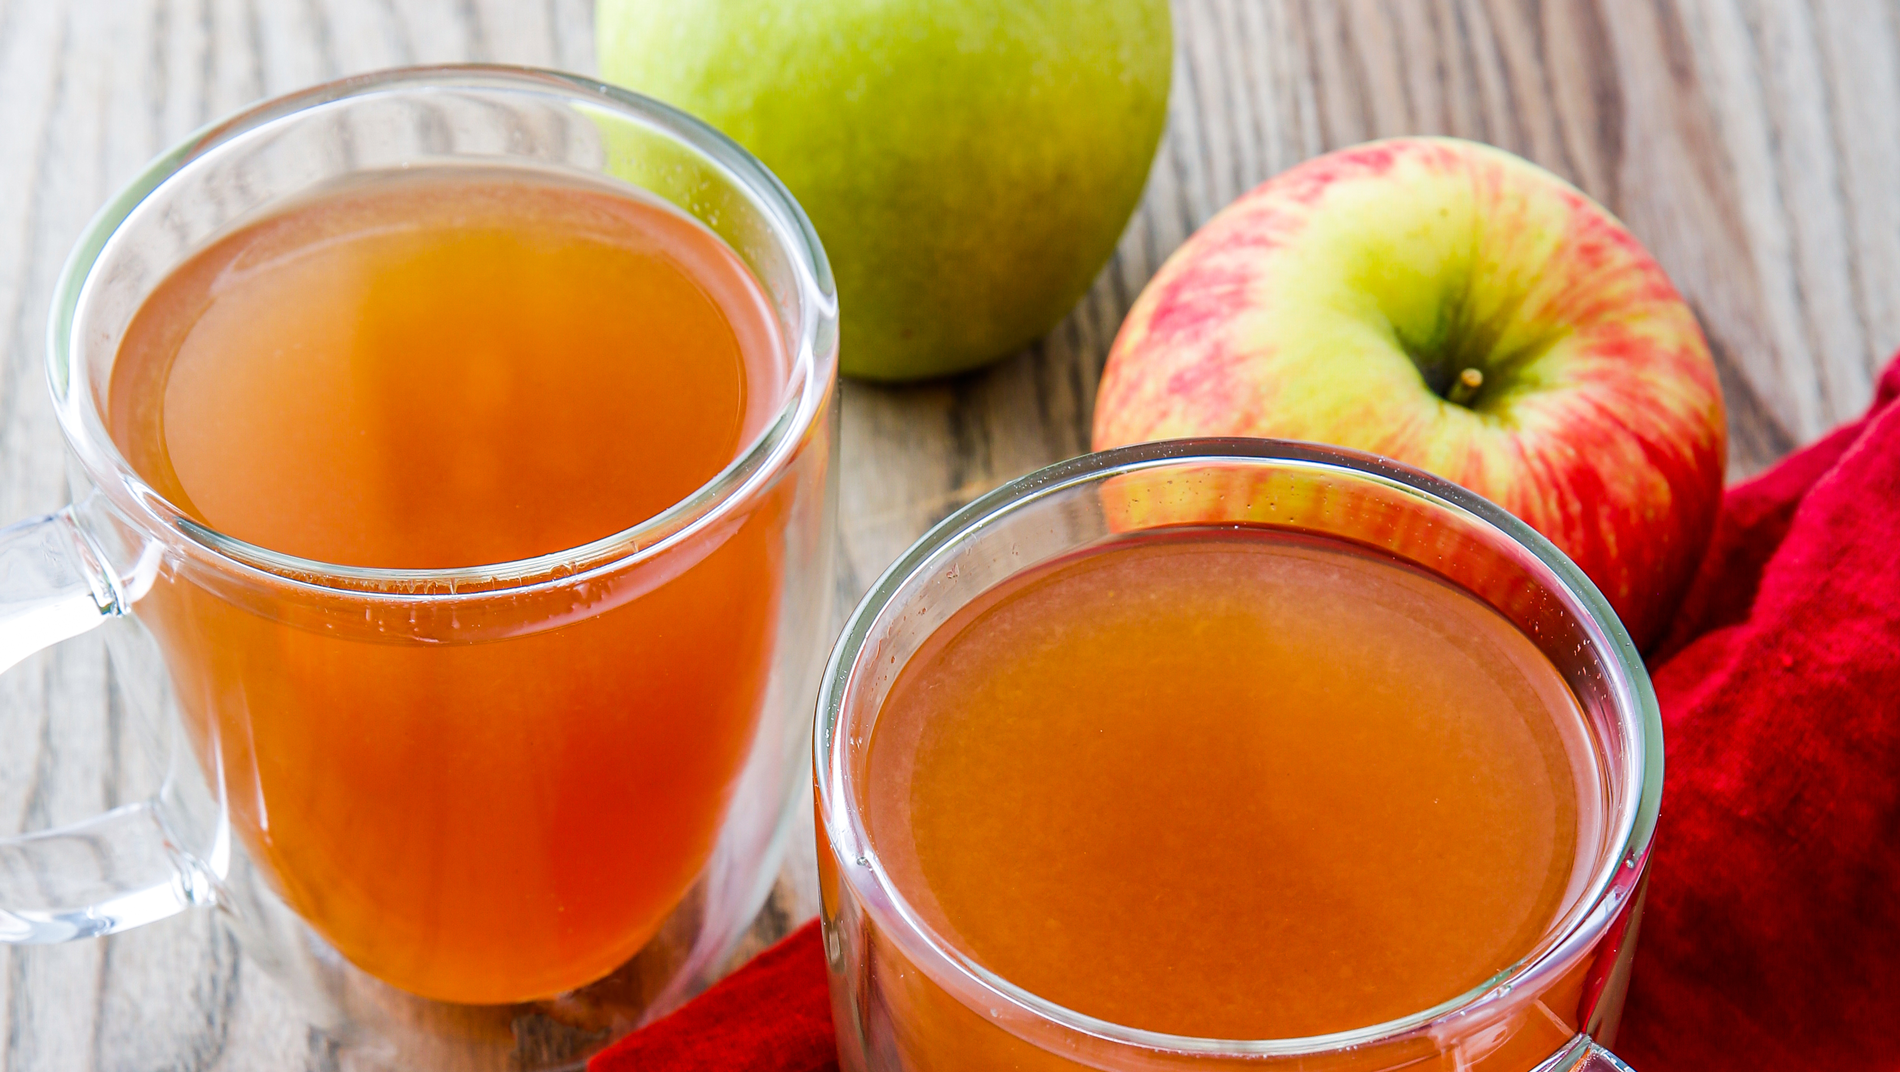 Best Apple Cider Recipe - How to Make Homemade Apple Cider